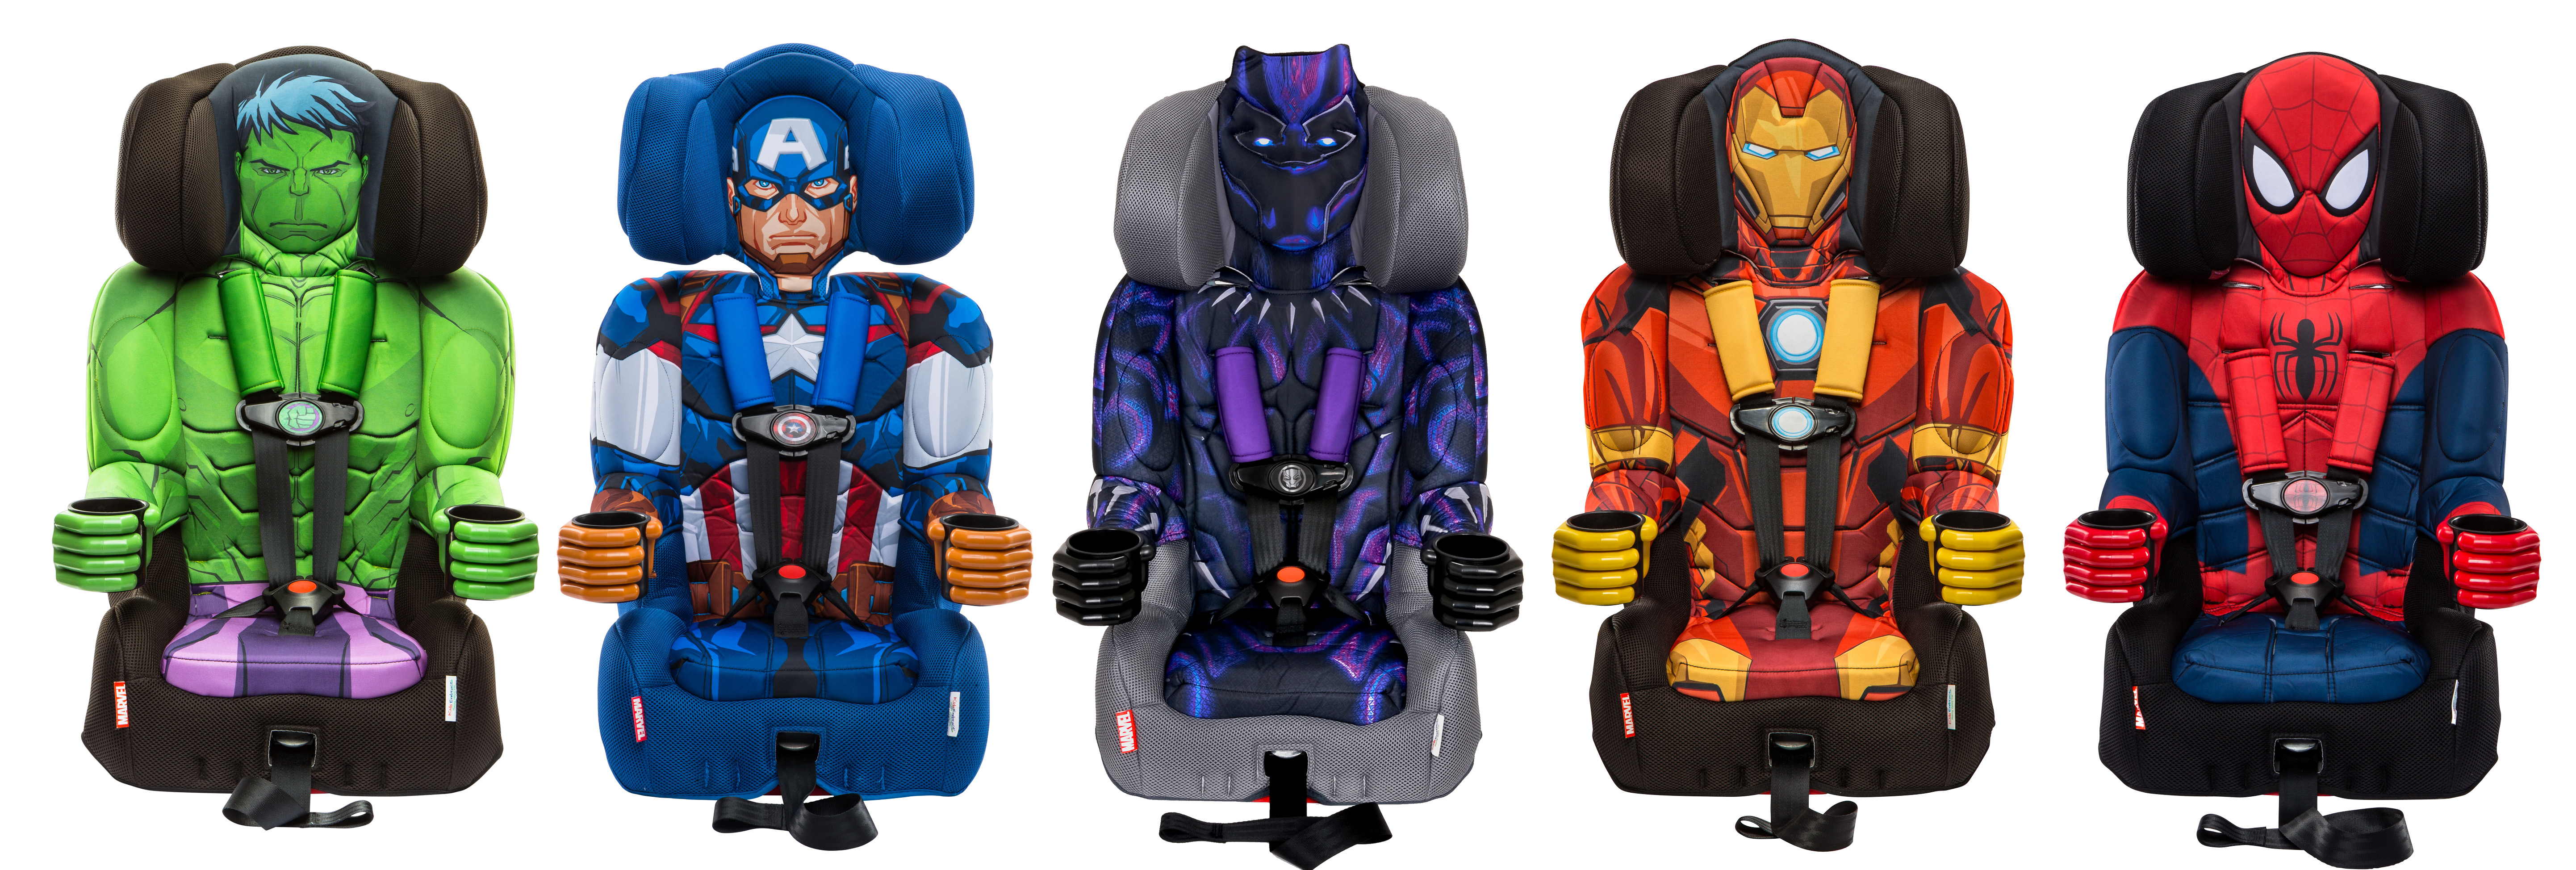 Marvel Avengers Car Seats